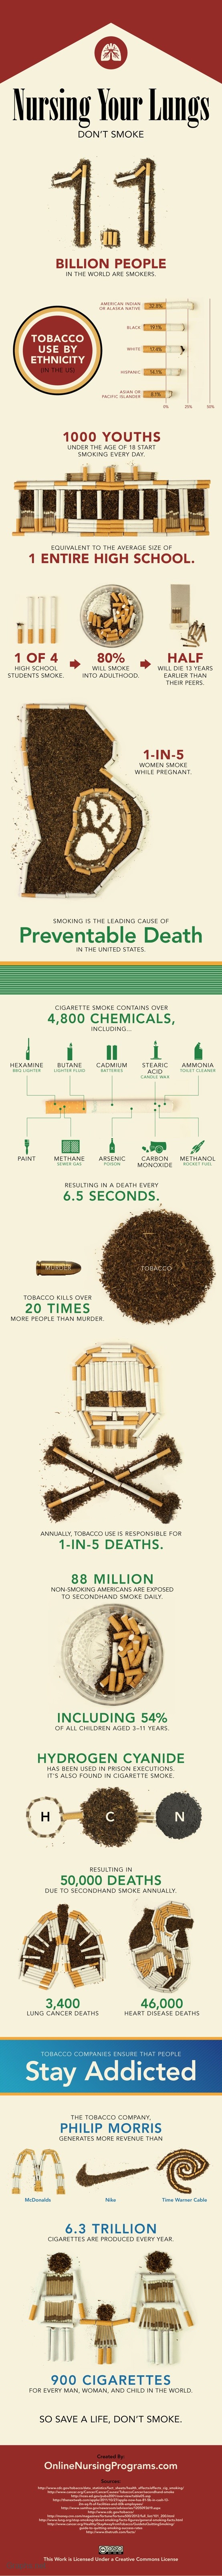 STATISTICS FOR CIGARETTE SMOKING